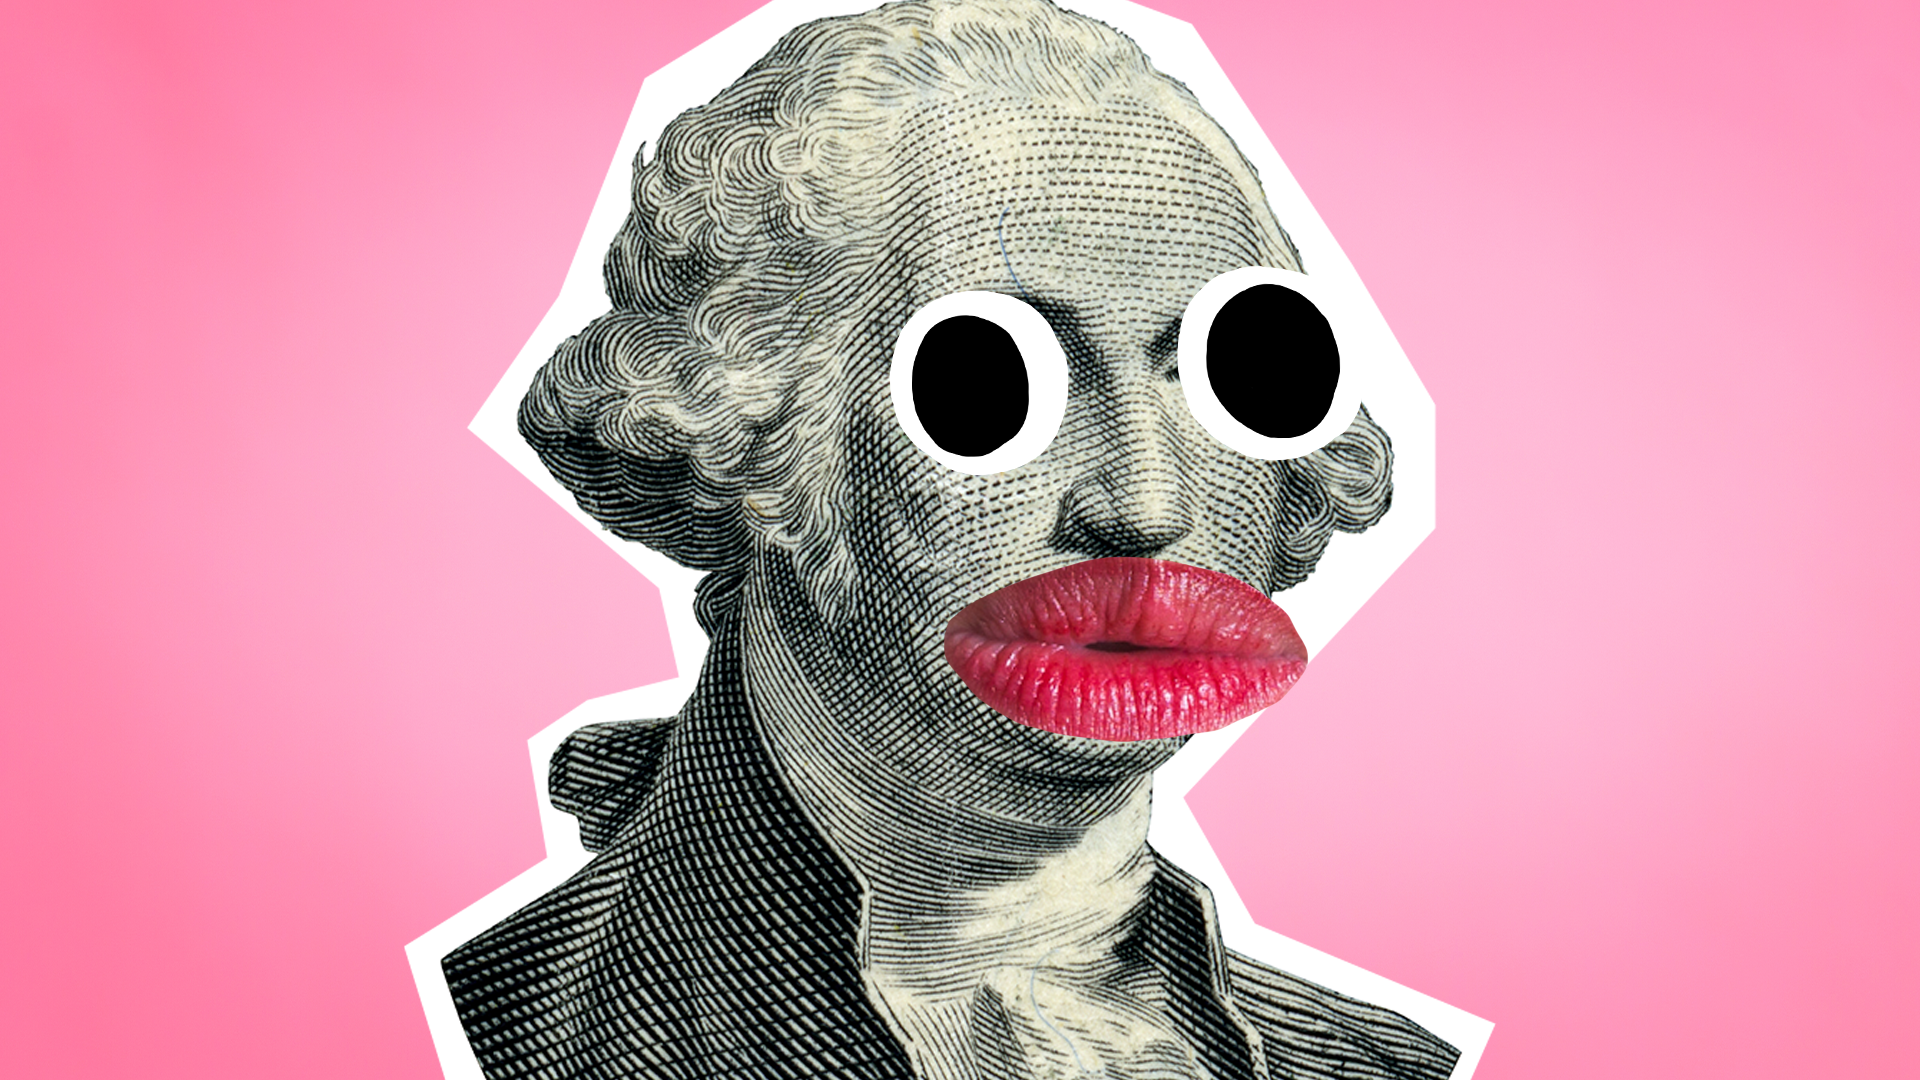 A fabulous George Washington on a pink background